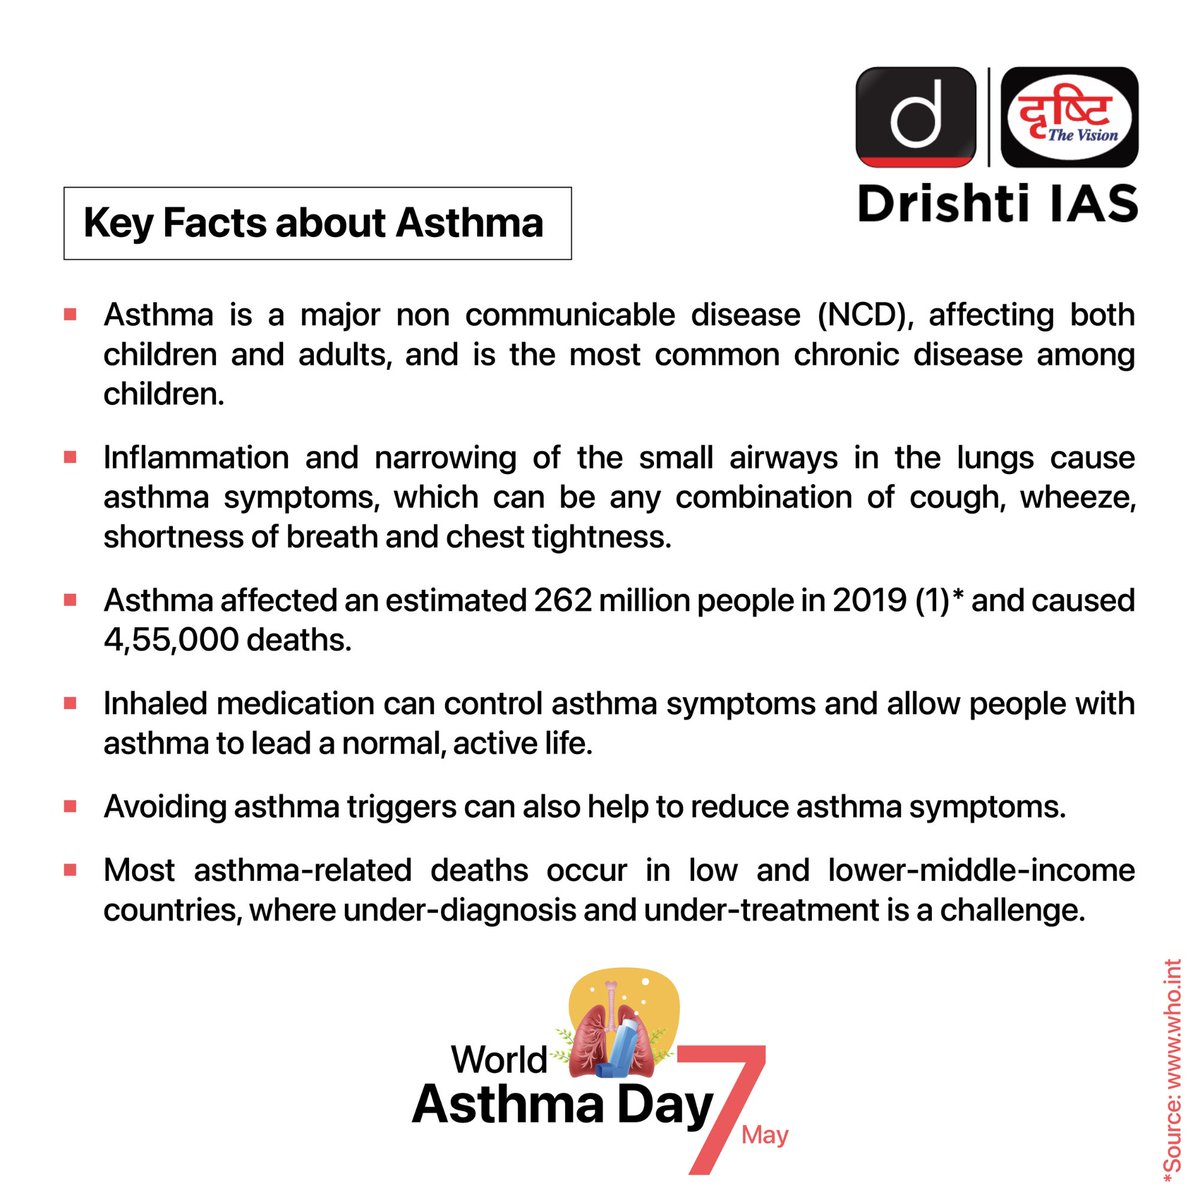 Every breath matters. Spread awareness on #WorldAsthmaDay!

#Asthma #Disease #NCD #Lungs #Infection #Breath #Inhale #Treatment #WHO #AsthmaAwareness #BreatheEasy #HealthyLungs #LungHealth #Awareness #BreathFreely #HealthIsWealth #UPSC #IAS #DrishtiIAS #DrishtiIASEnglish